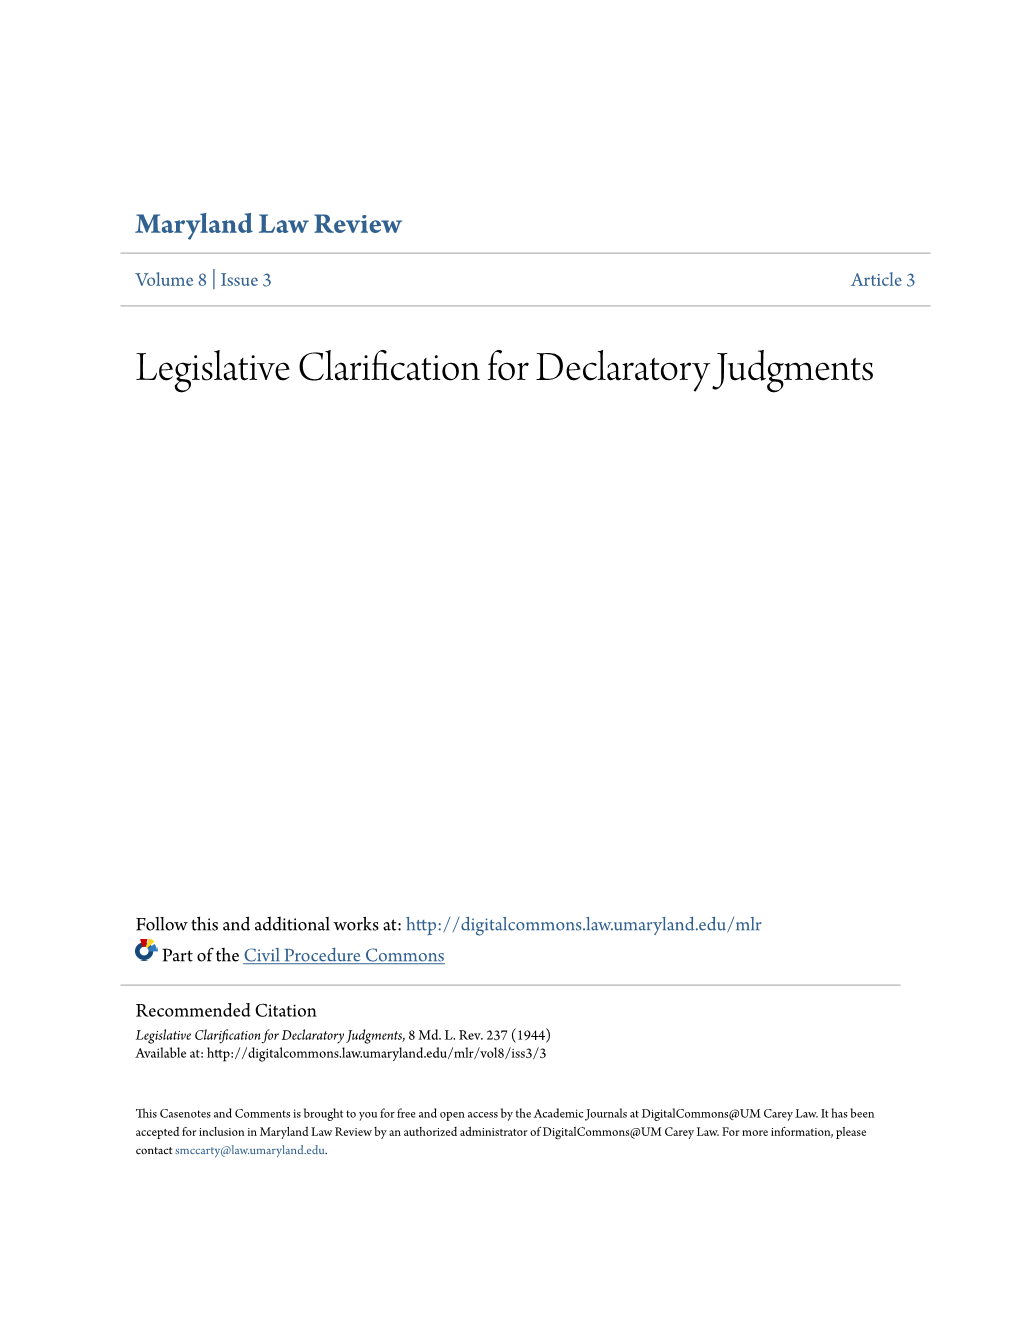 Legislative Clarification for Declaratory Judgments